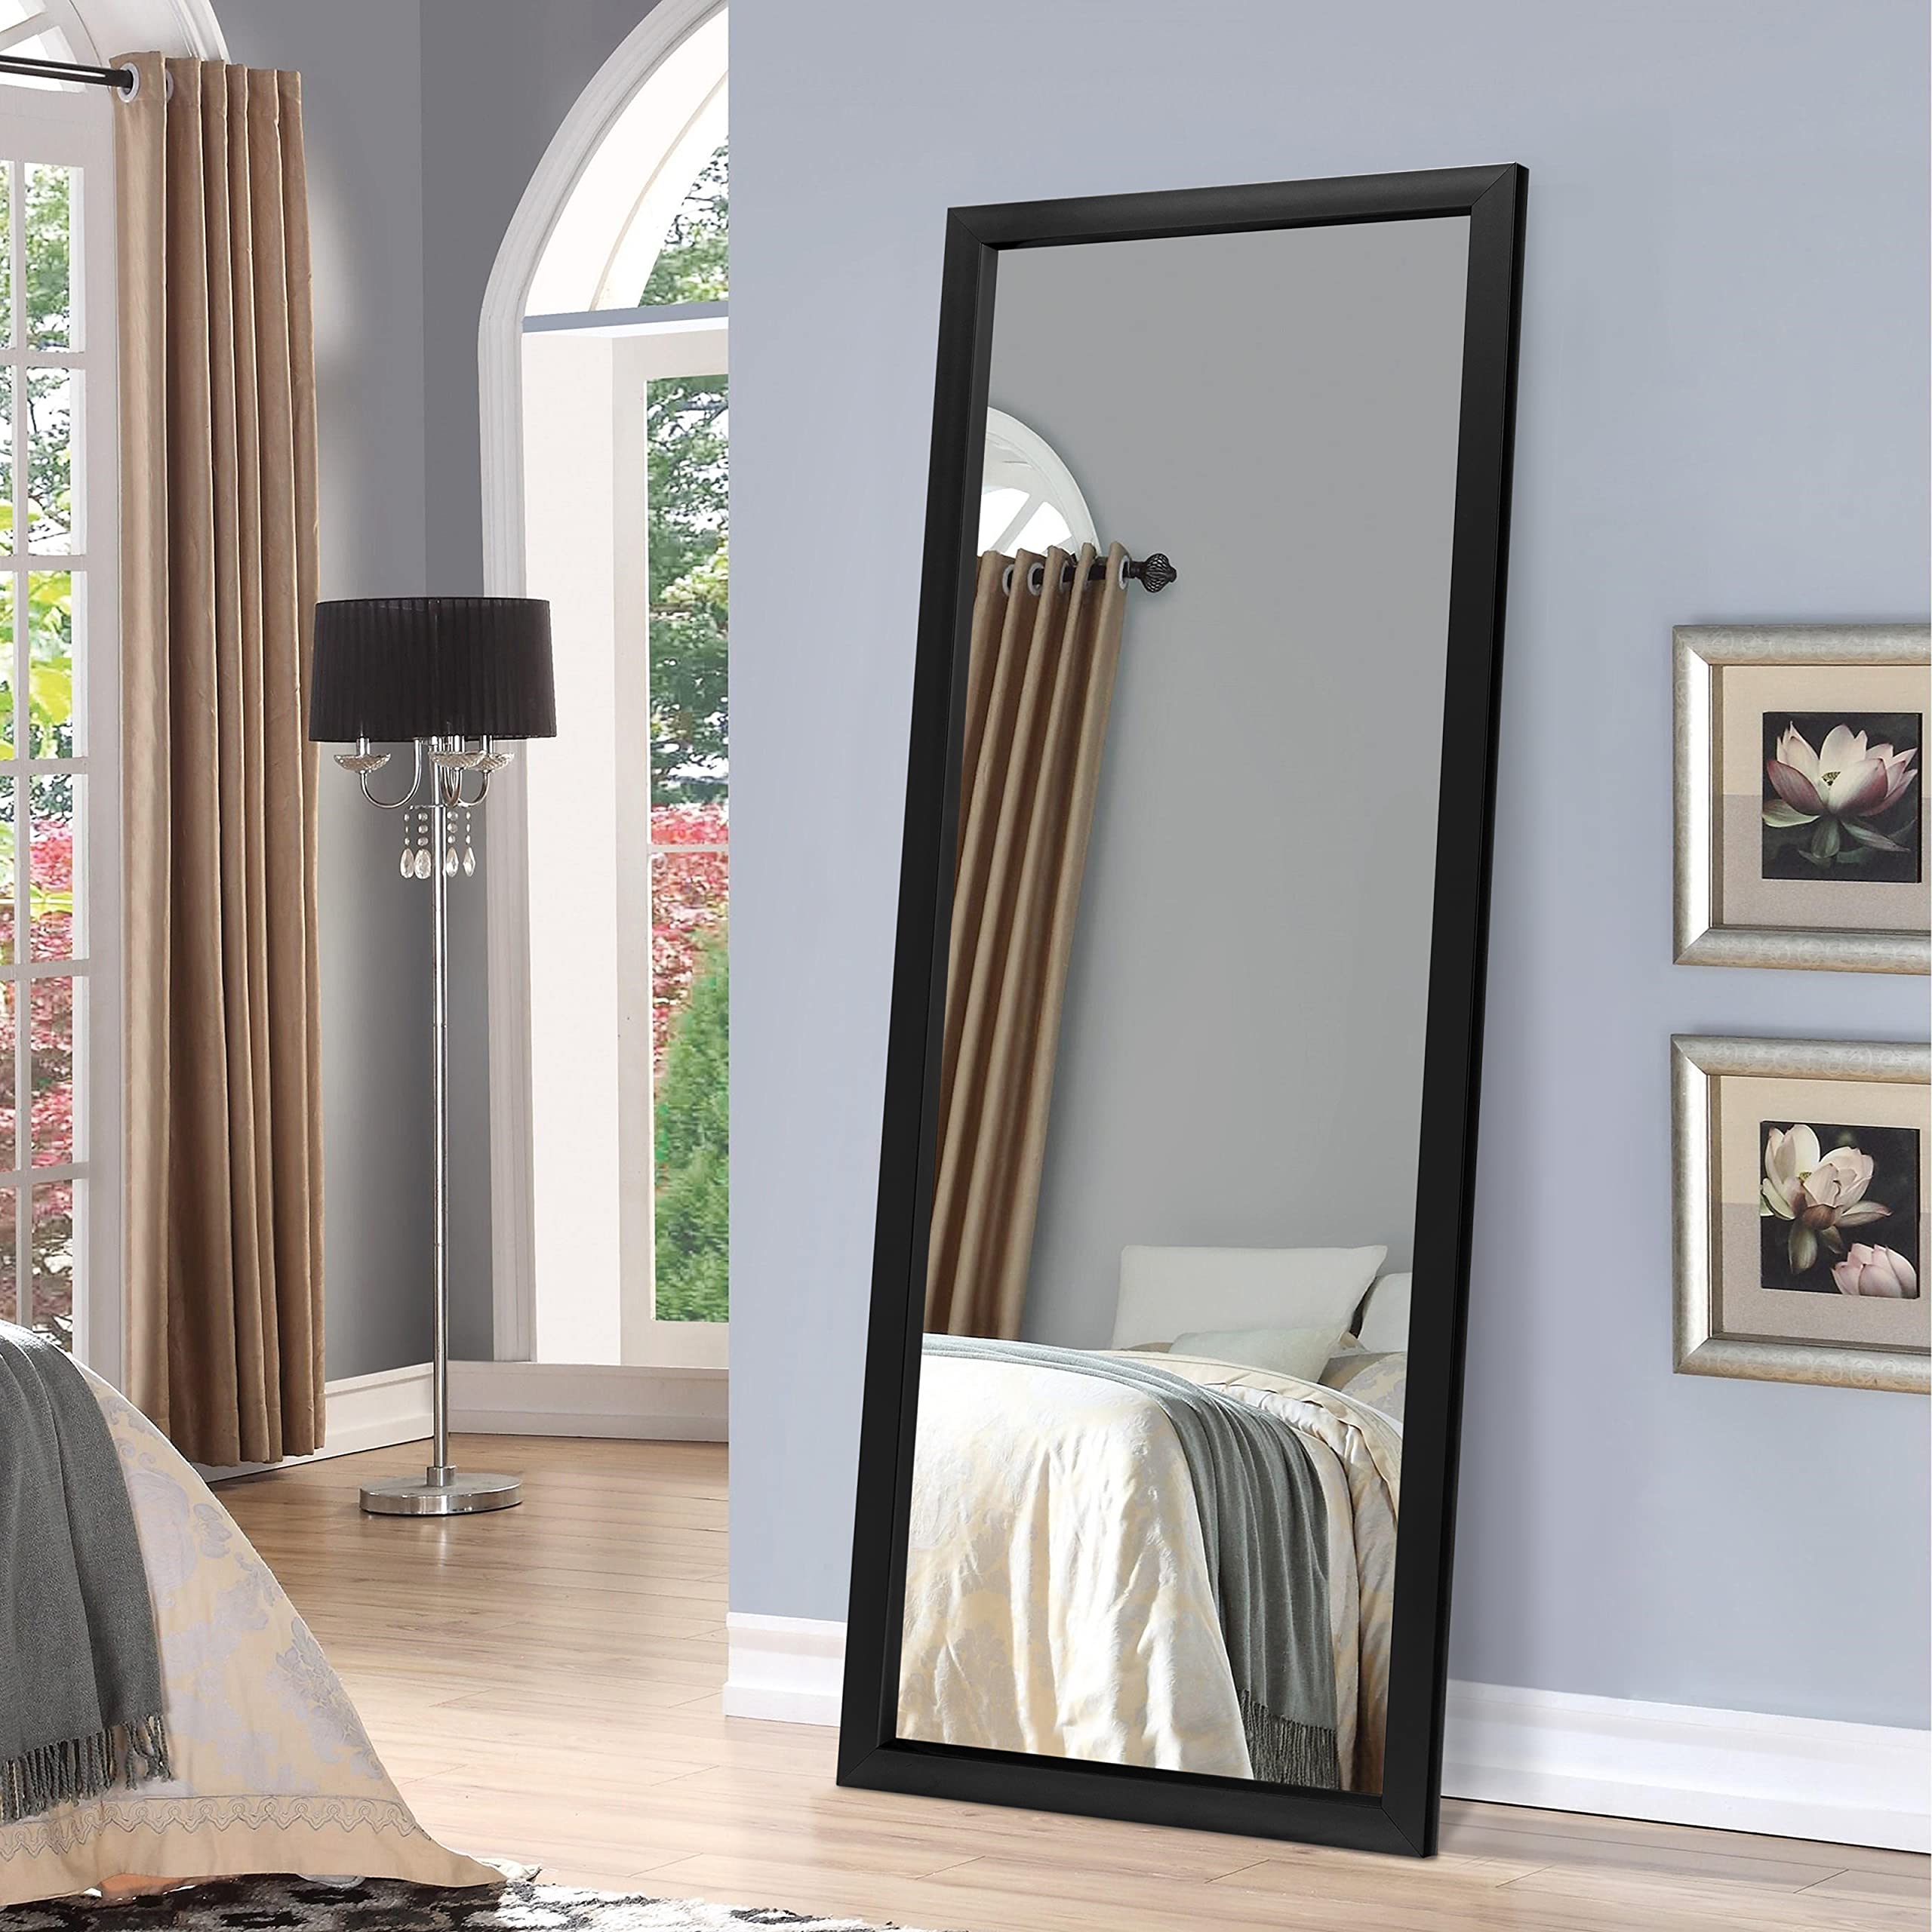 NeuType Full Length Mirror 47"x16" Large Mirror Bedroom Locker Room Standing Hanging Mirror Dressing Mirror, Black(No Stand)